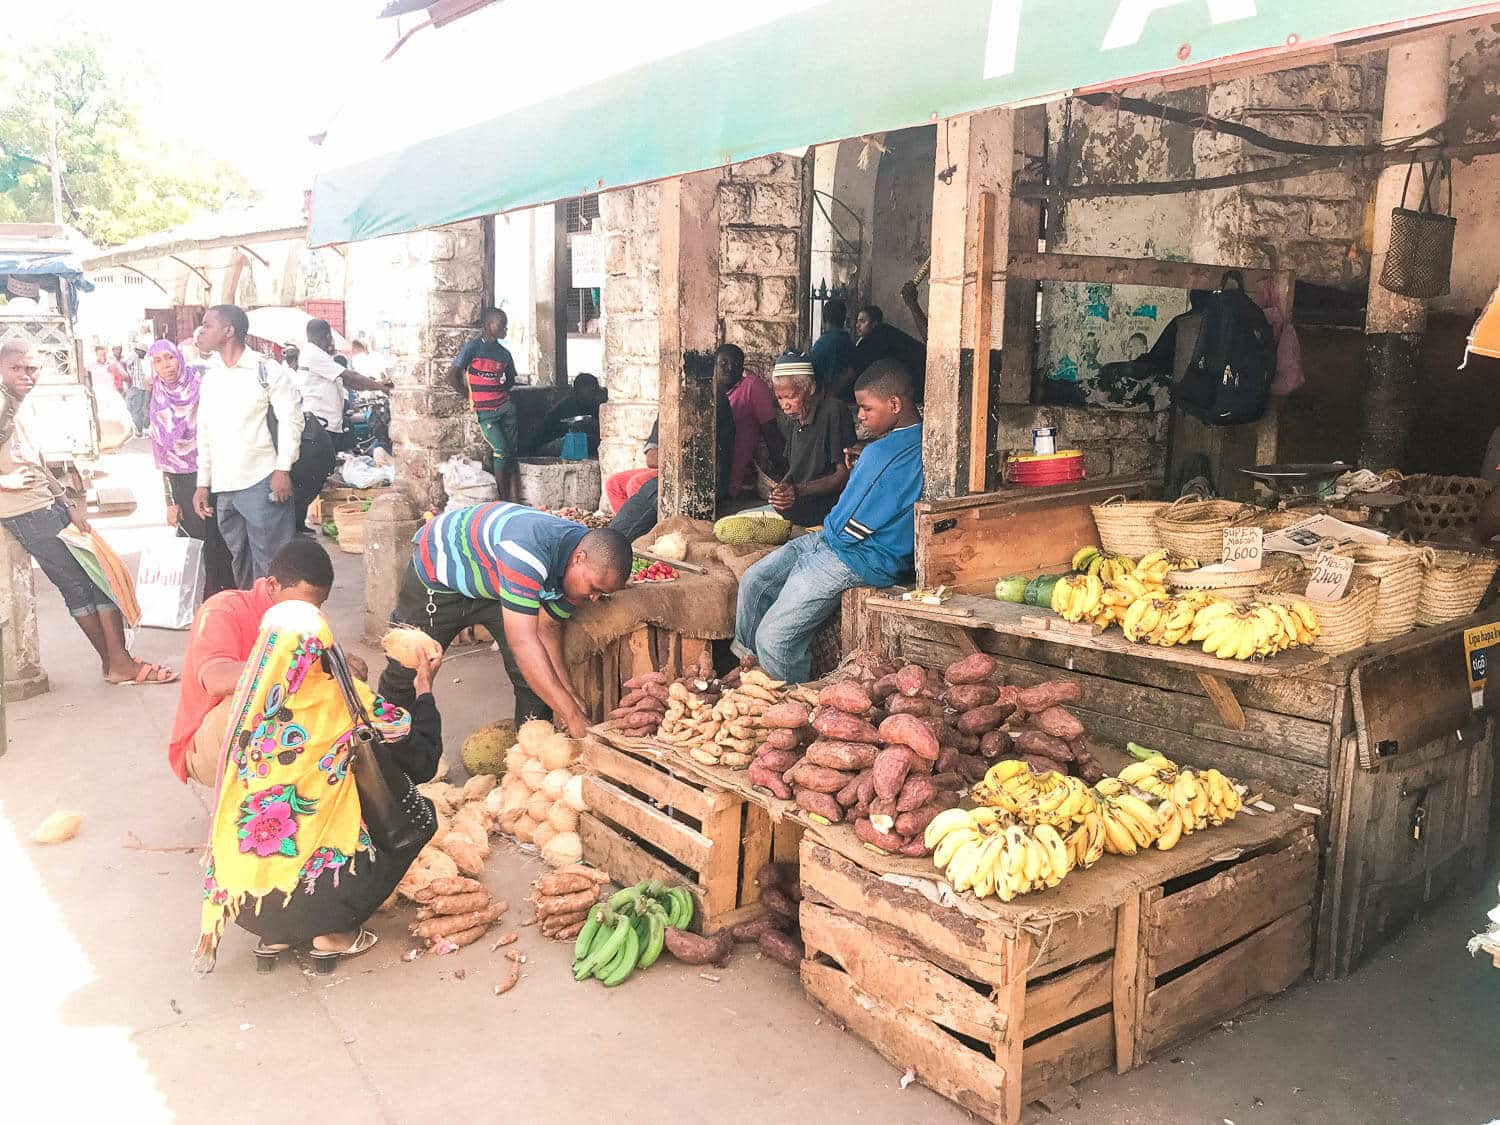 Market in Stone Town, Tanzania